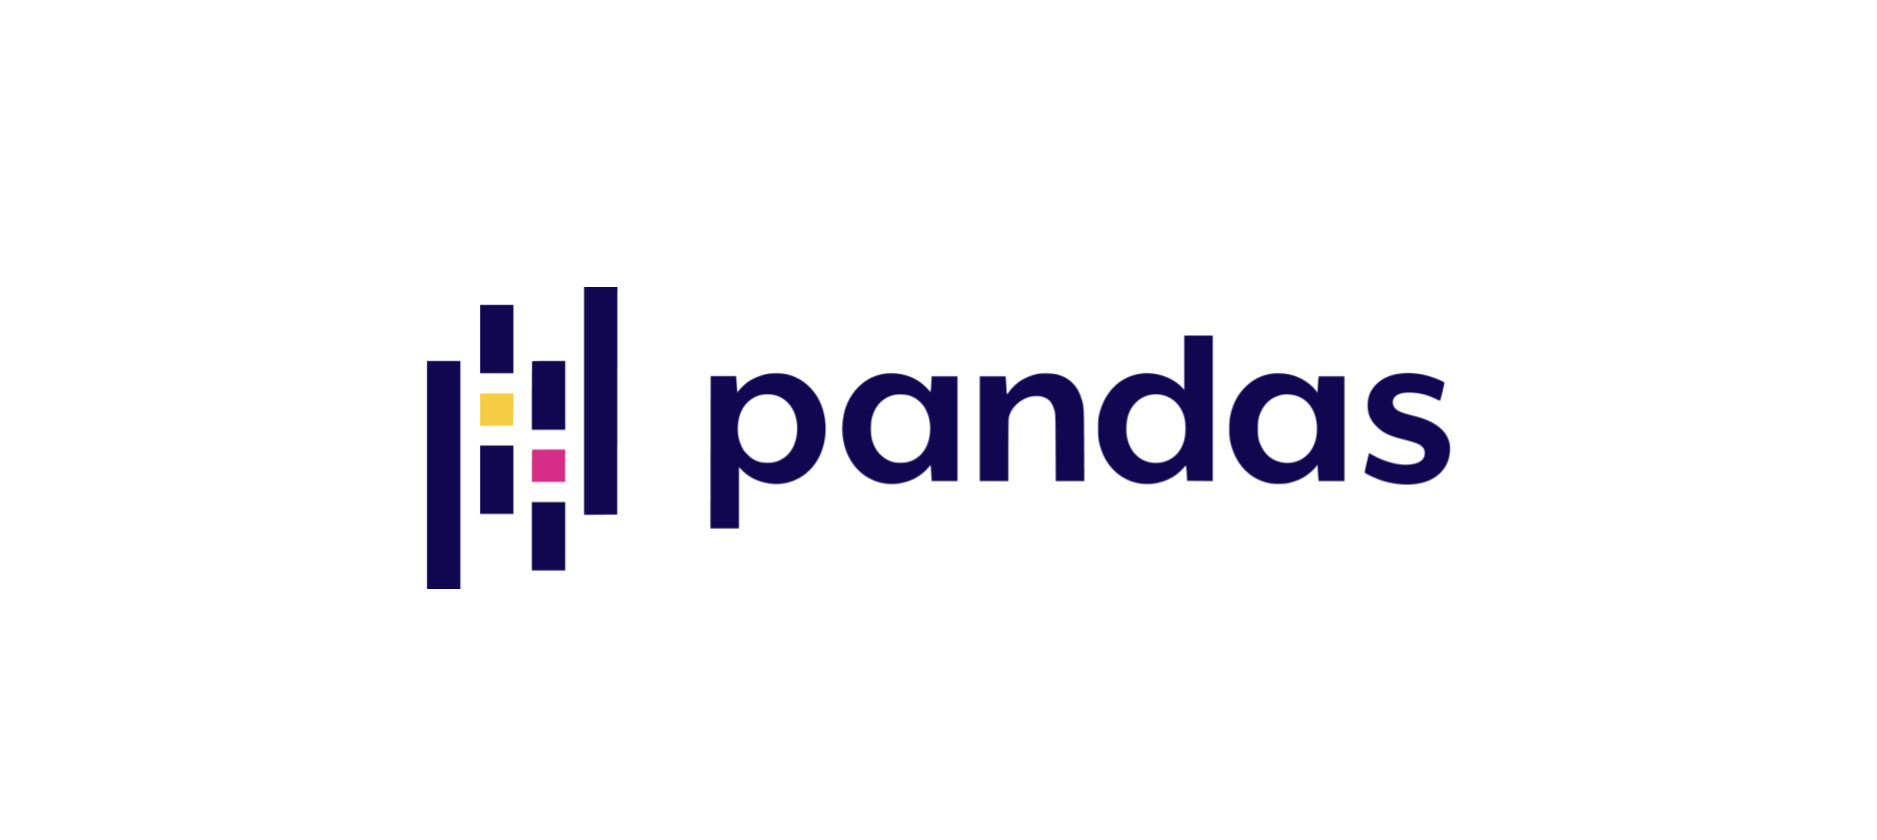 Logo pandas